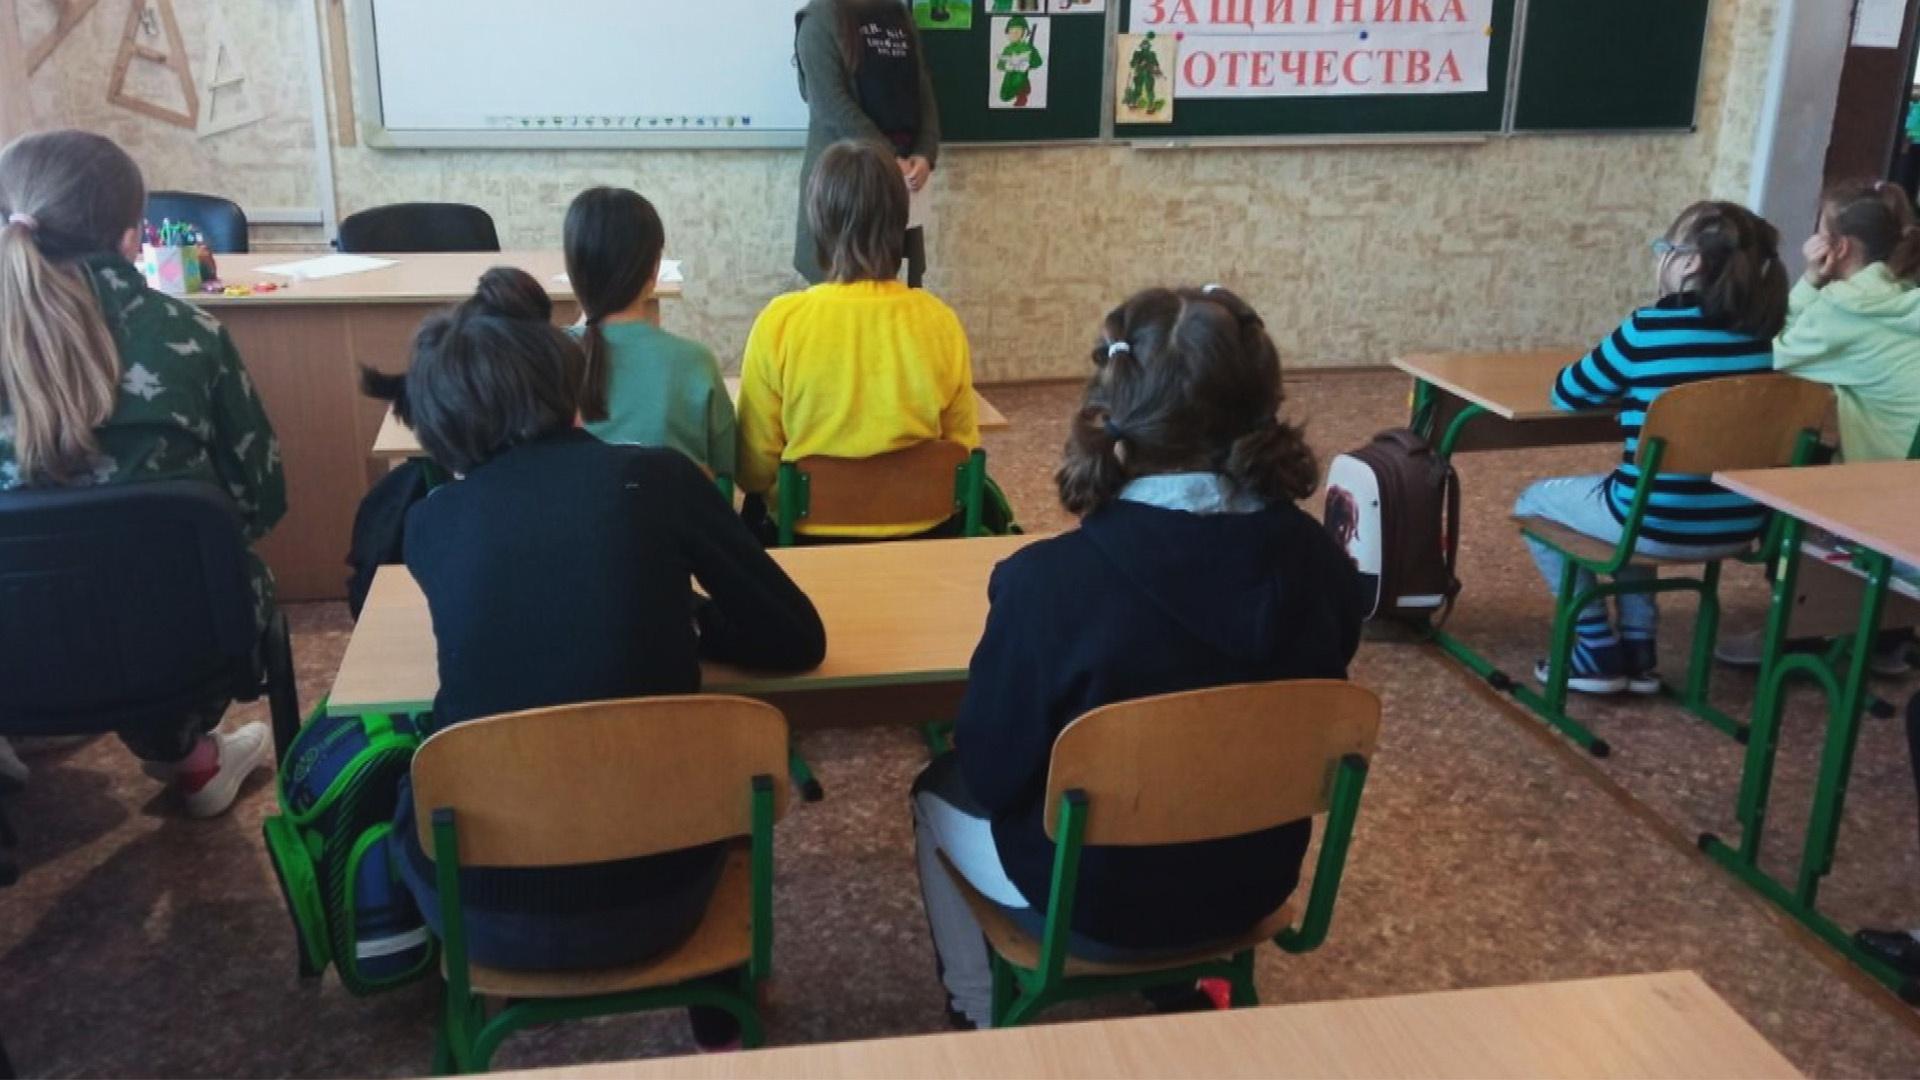 Group of children sitting at desks